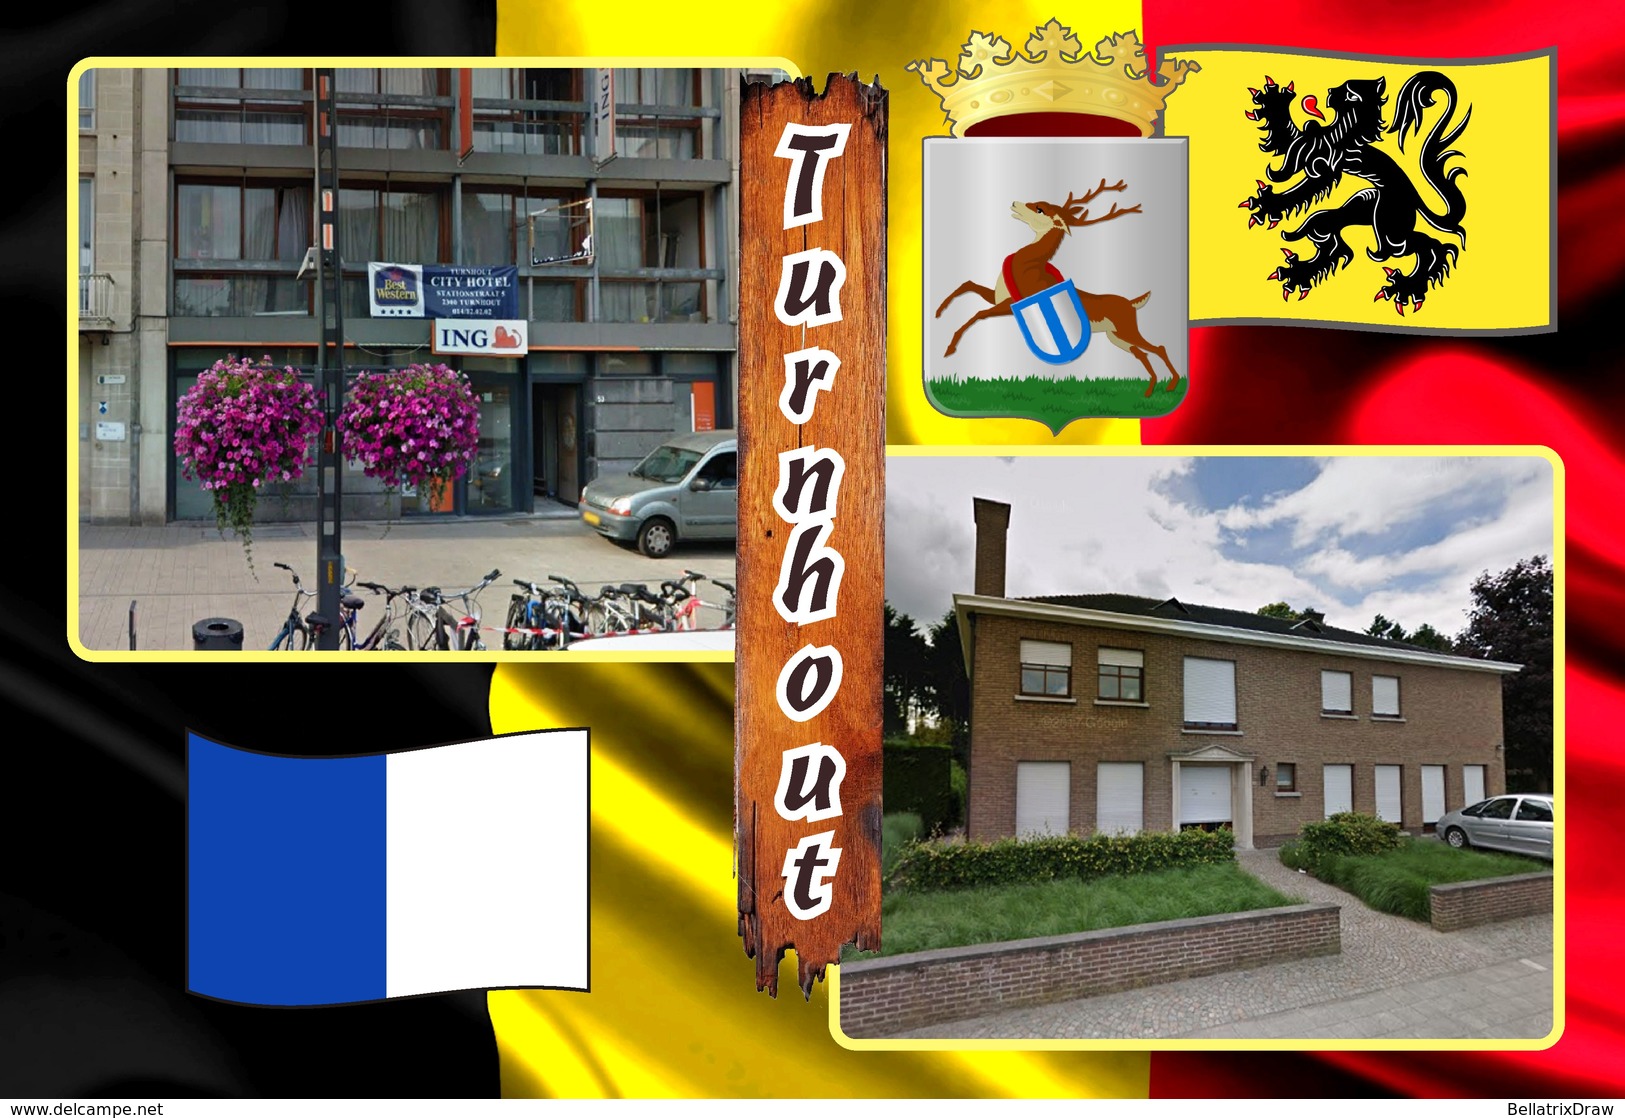 Postcards, REPRODUCTION, Municipalities of Belgium, Turnhout, duplex IX, 51 pcs. (397 to 447)